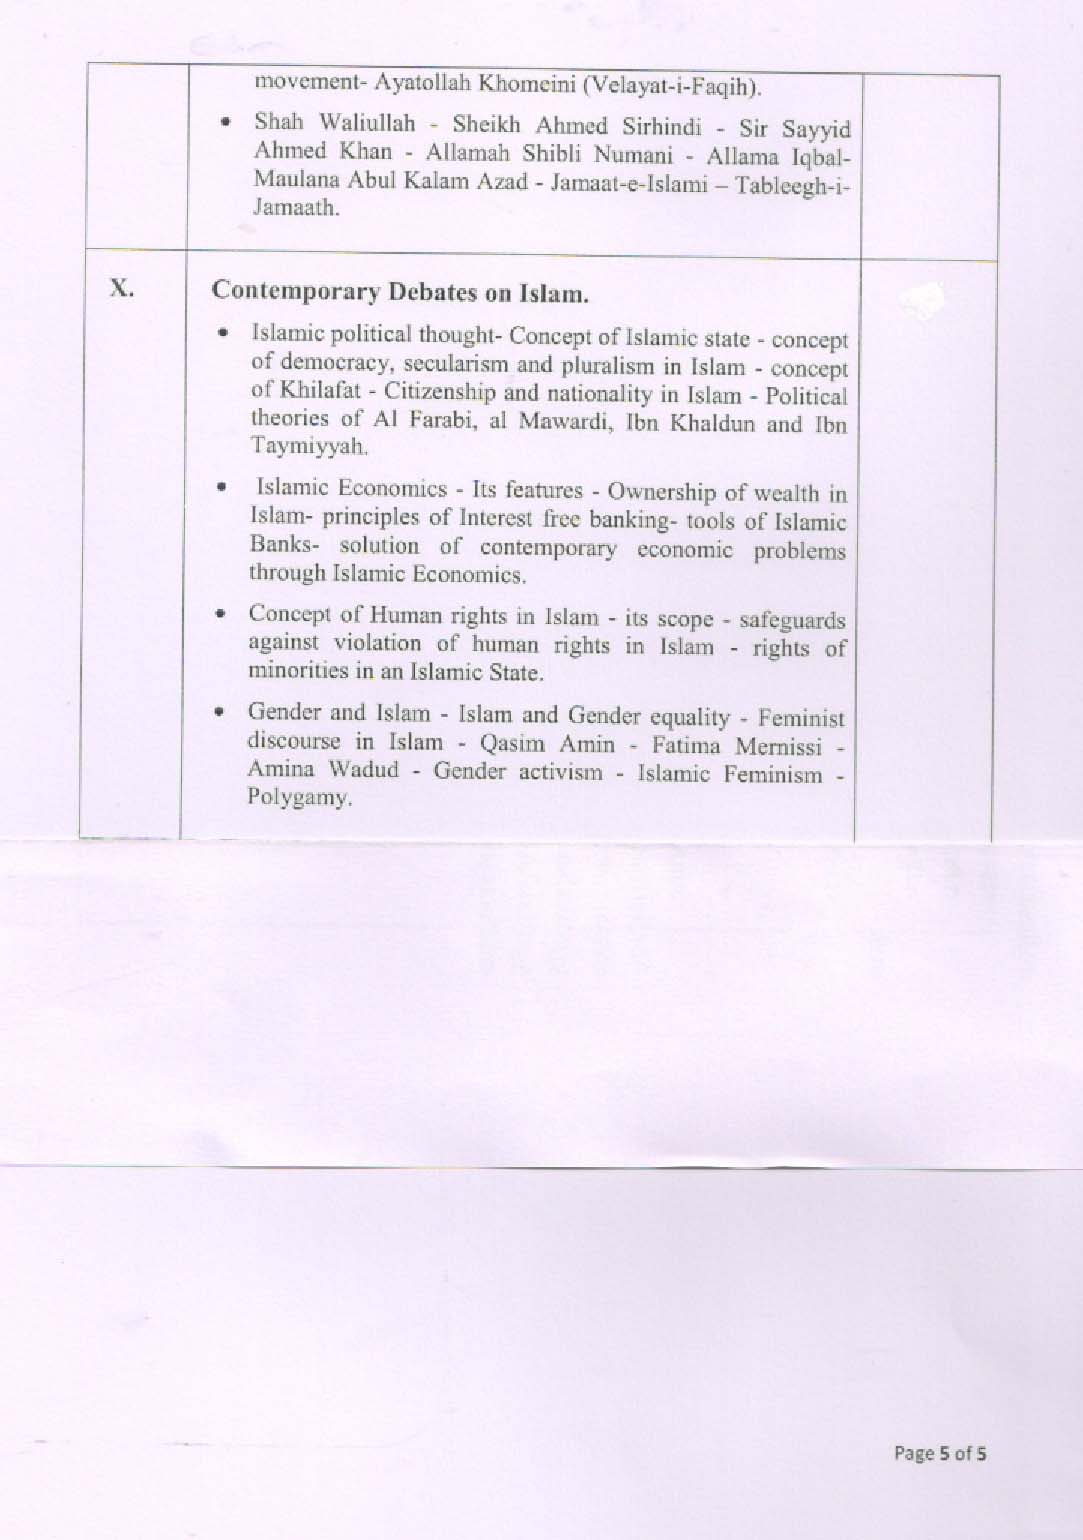 Kerala PSC Assistant Professor Ismalic History Exam Syllabus - Notification Image 5